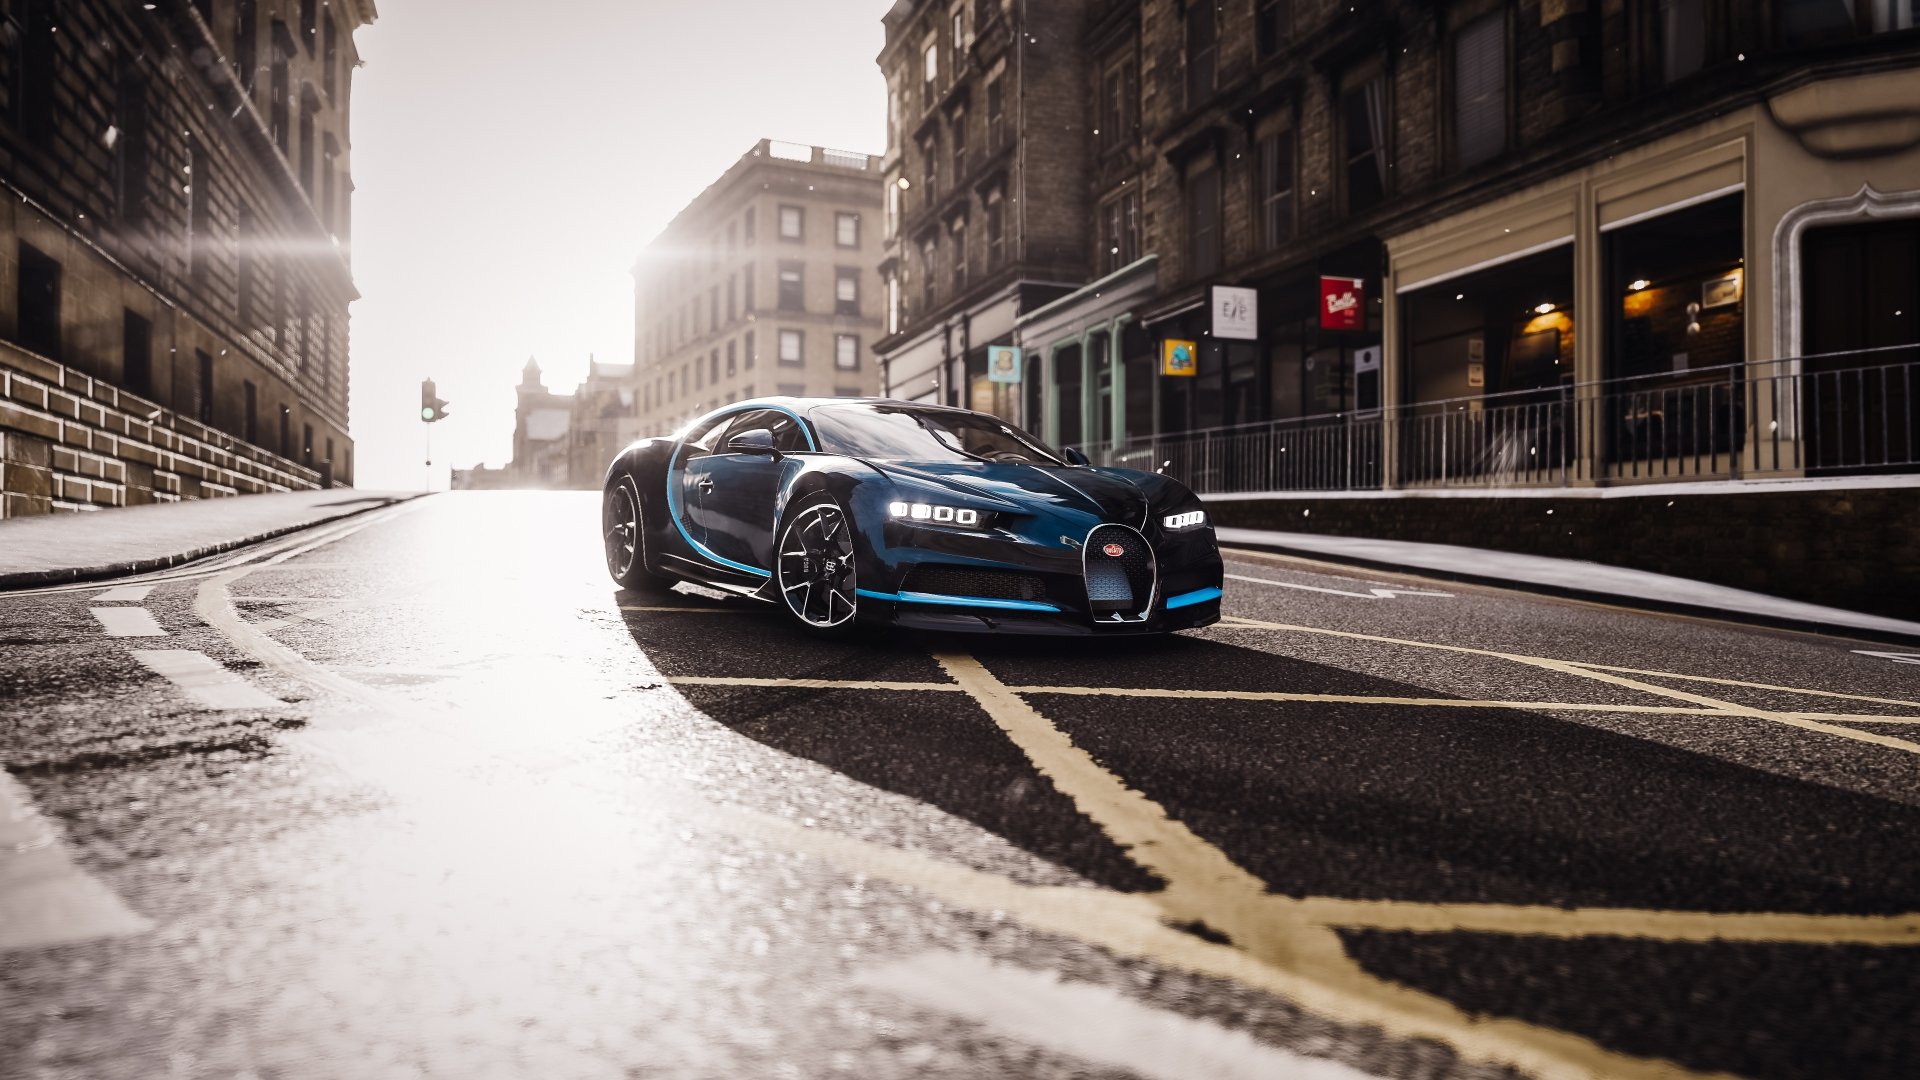 Speed through Forza Horizon 4 with a sleek Bugatti Chiron featured in this vibrant HD desktop wallpaper.